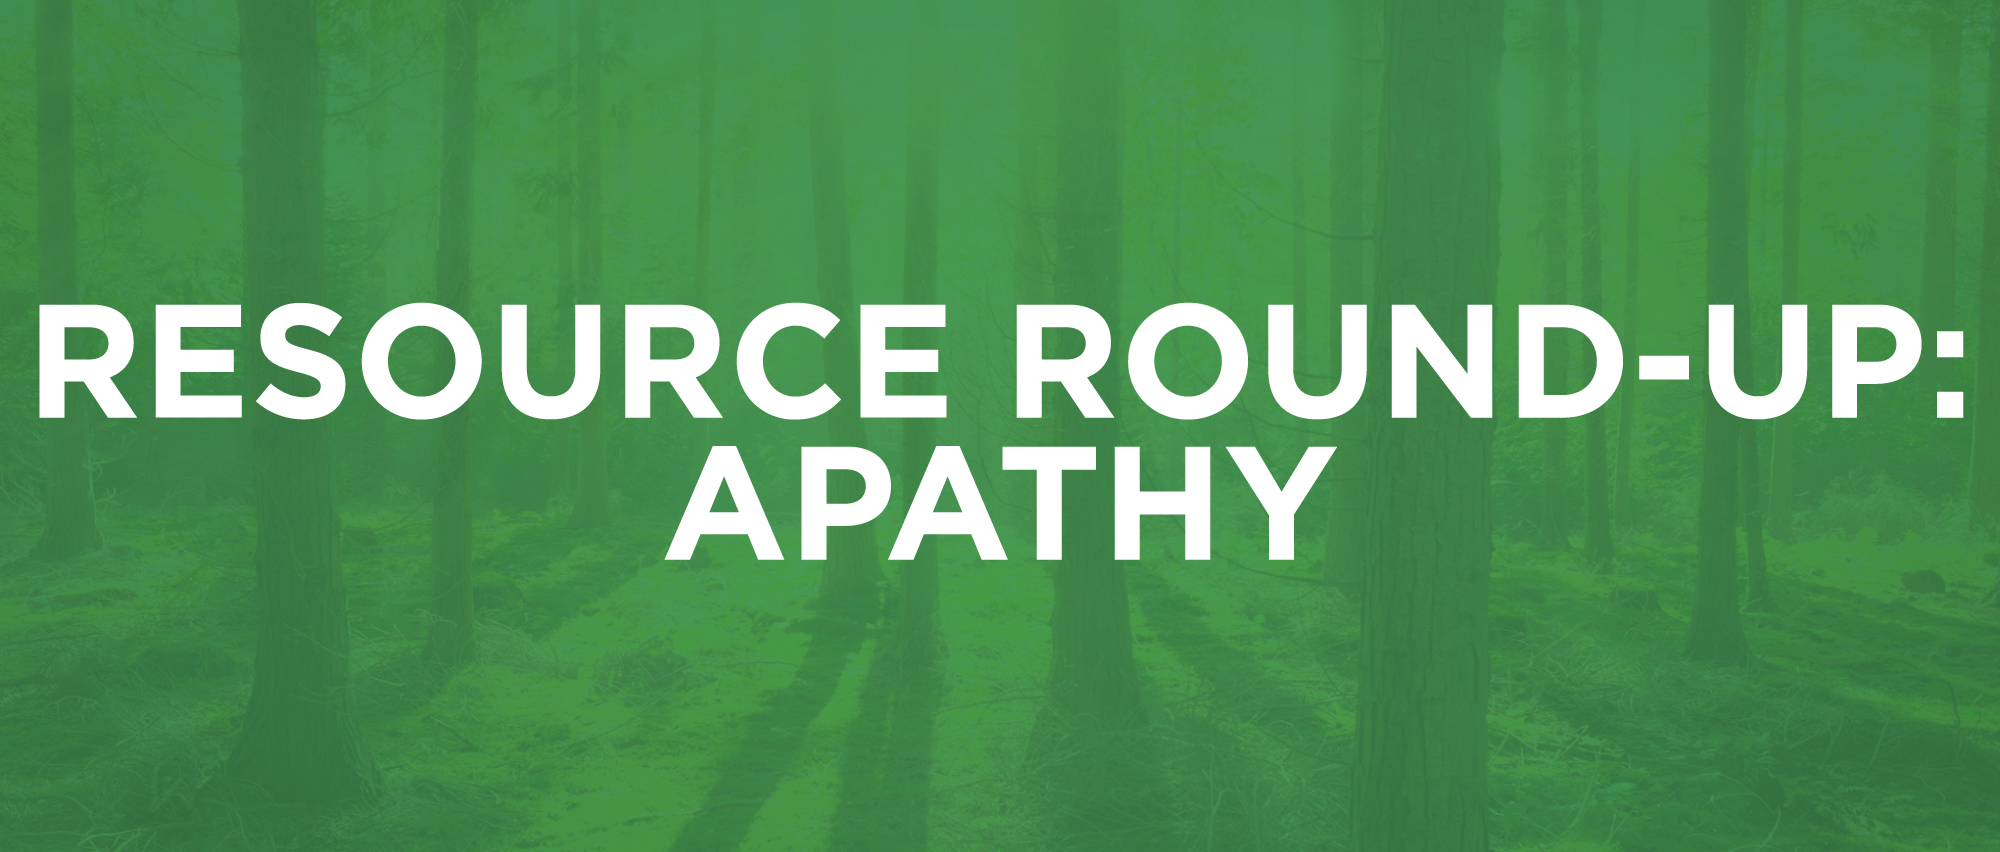 ResourceRoundup-1-Apathy_updated.jpg